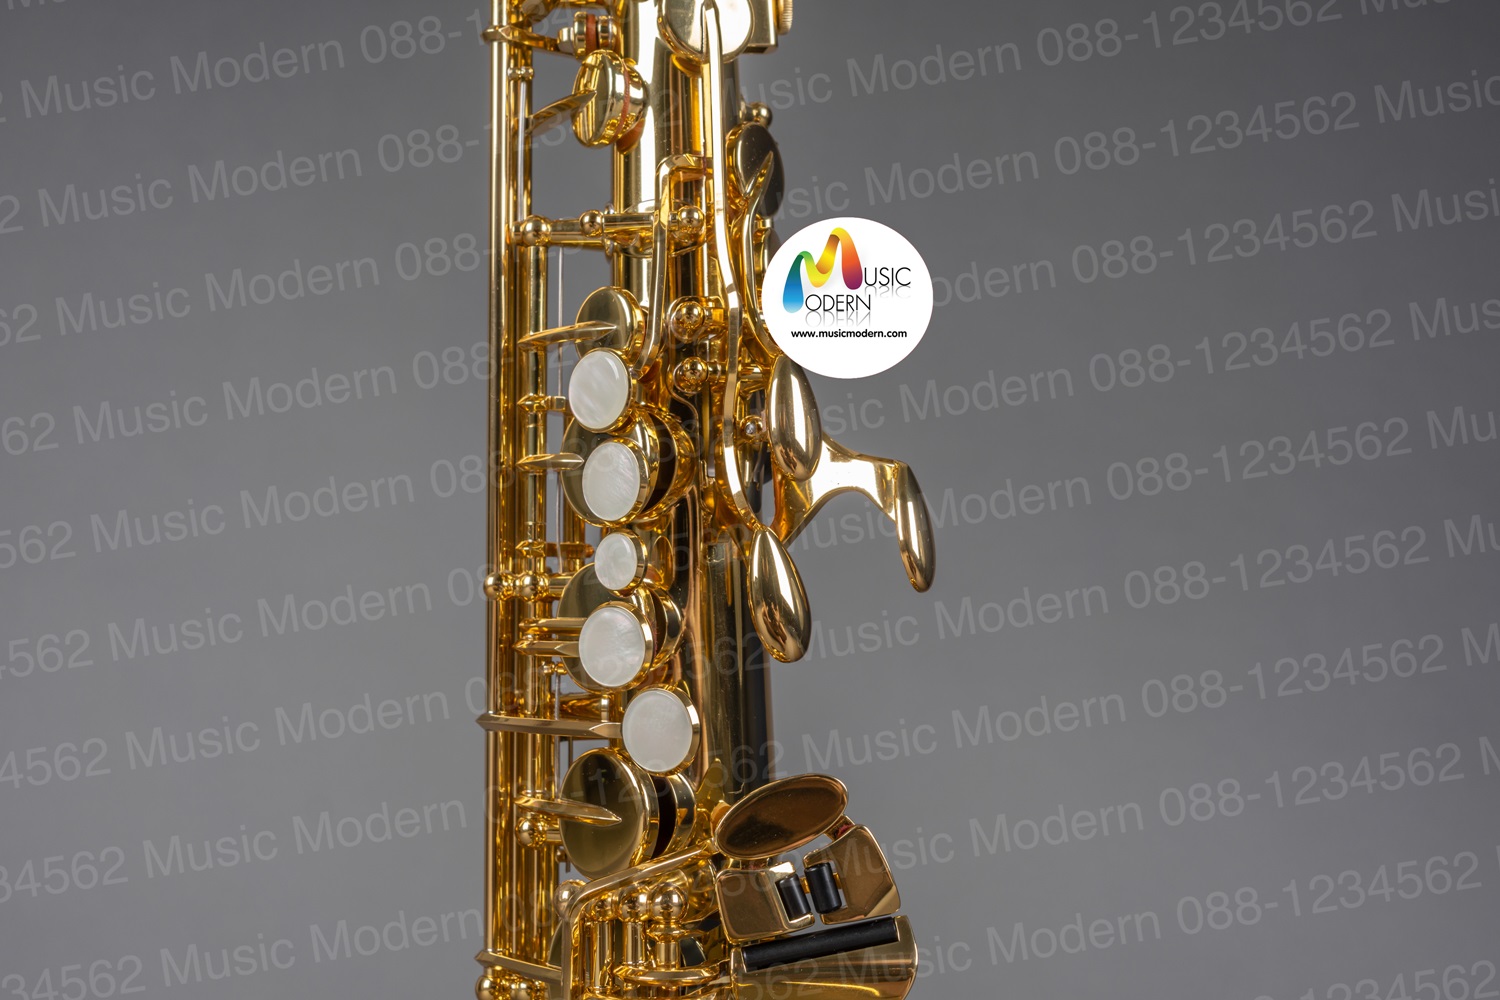 Yamaha Alto Saxophone YAS-280